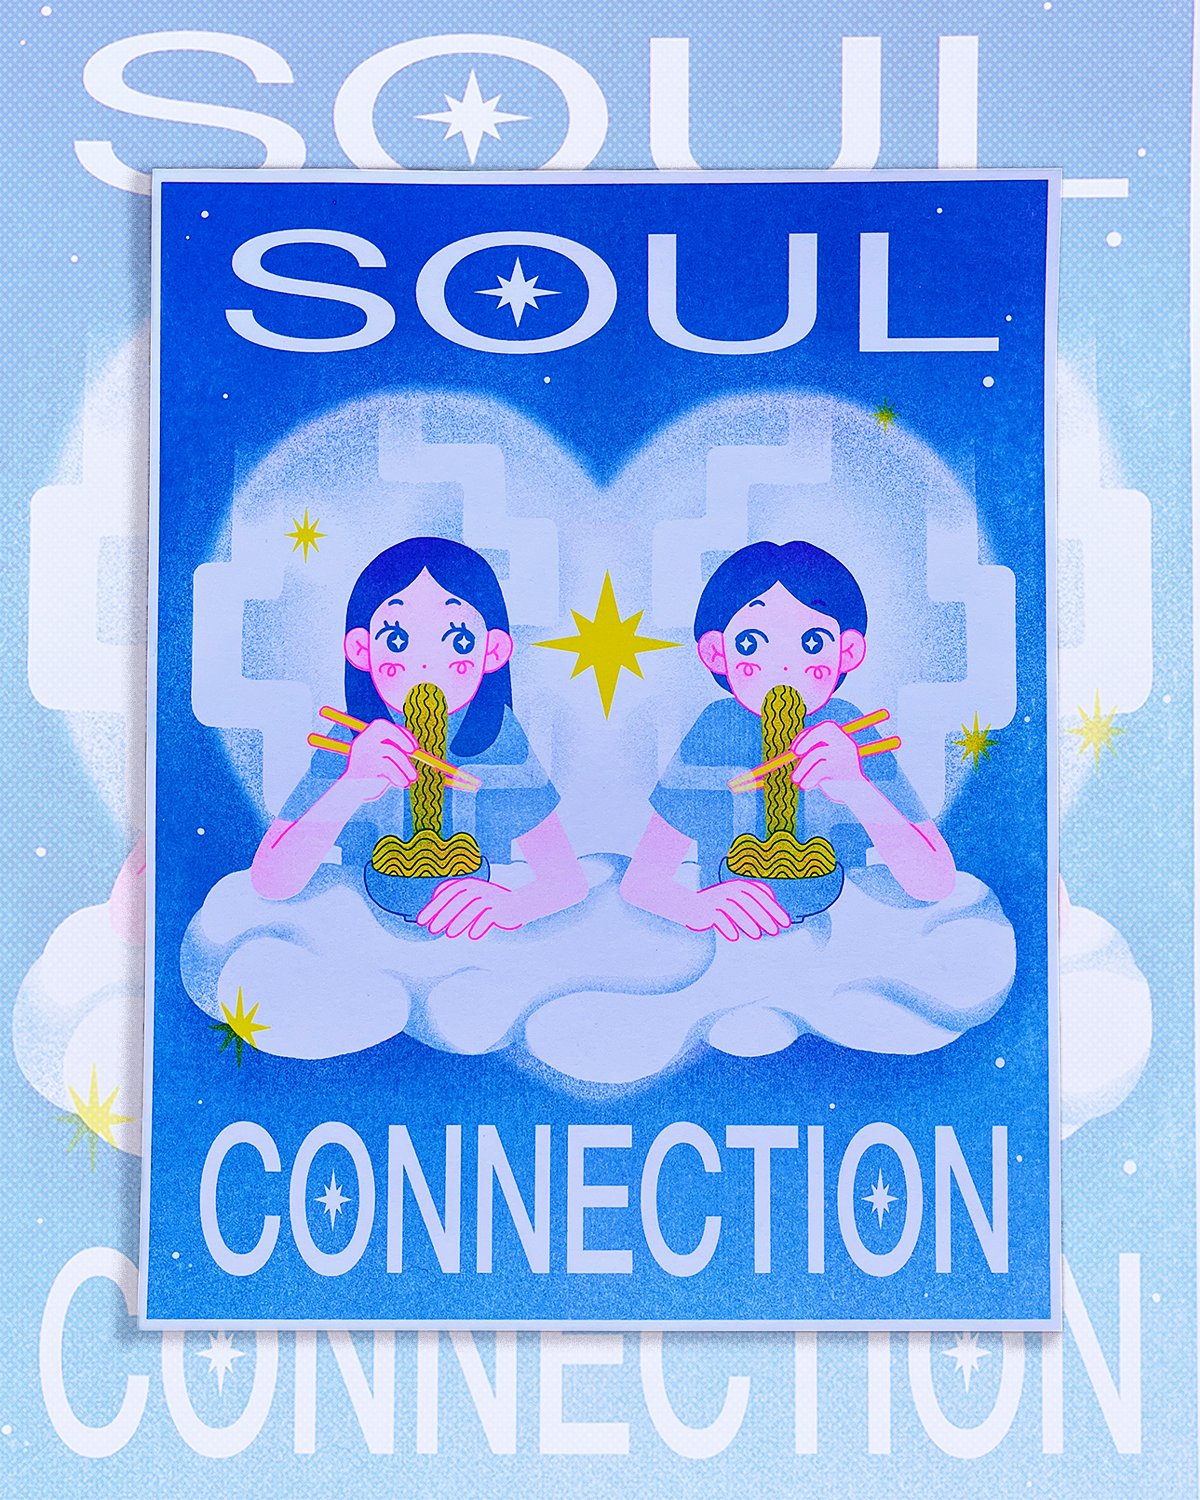 Soul Connection - 11" x 14" Risograph Print